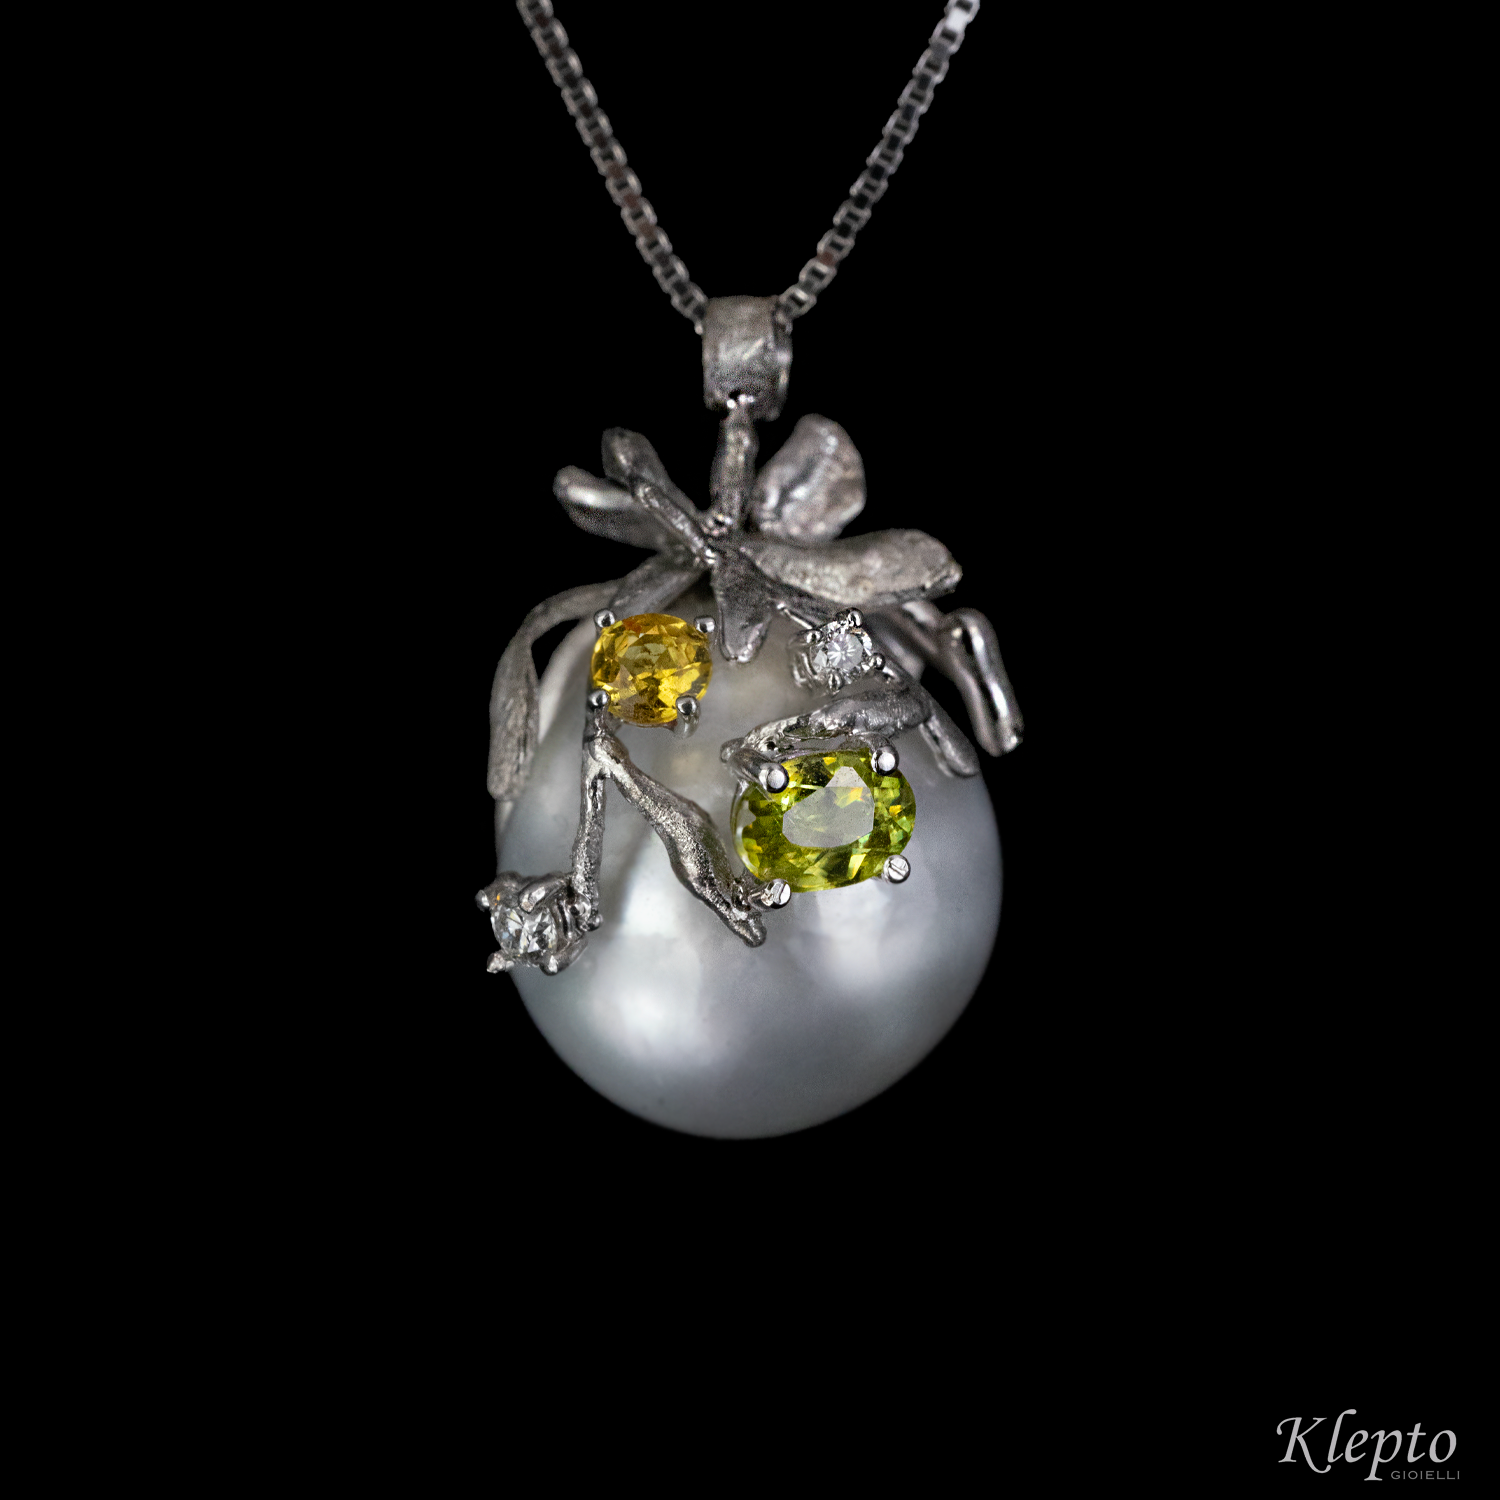 White gold pendant with Australian Pearl, Sphene, Sapphire and Diamonds